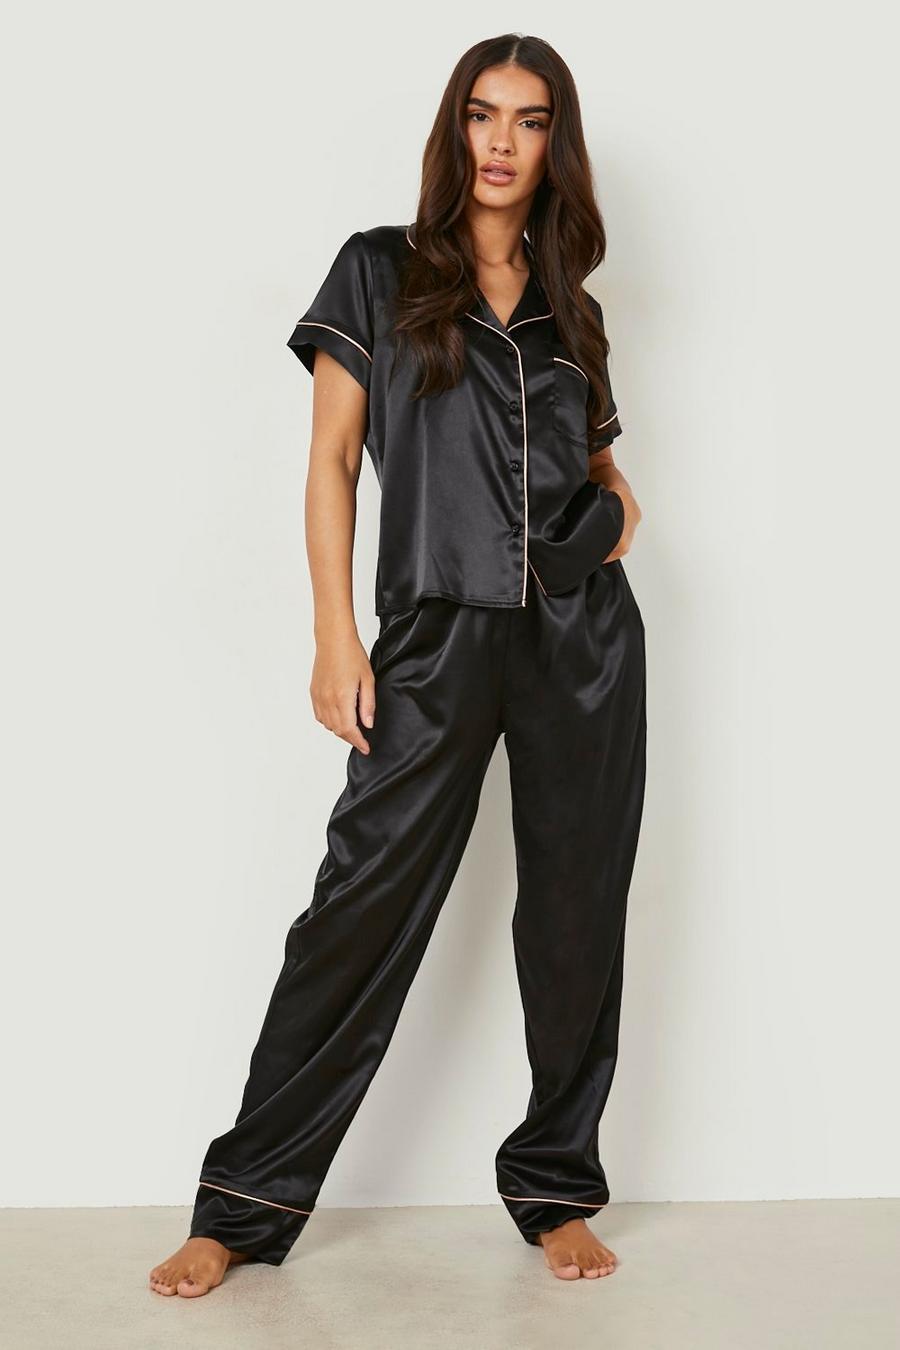 XS-XXL DiaryLook Soft Pyjamas for Women Long Sleeve Womens Pyjamas Sets Sleepwear Pjs for Ladies sets UK Size Pyjamas 8-28 